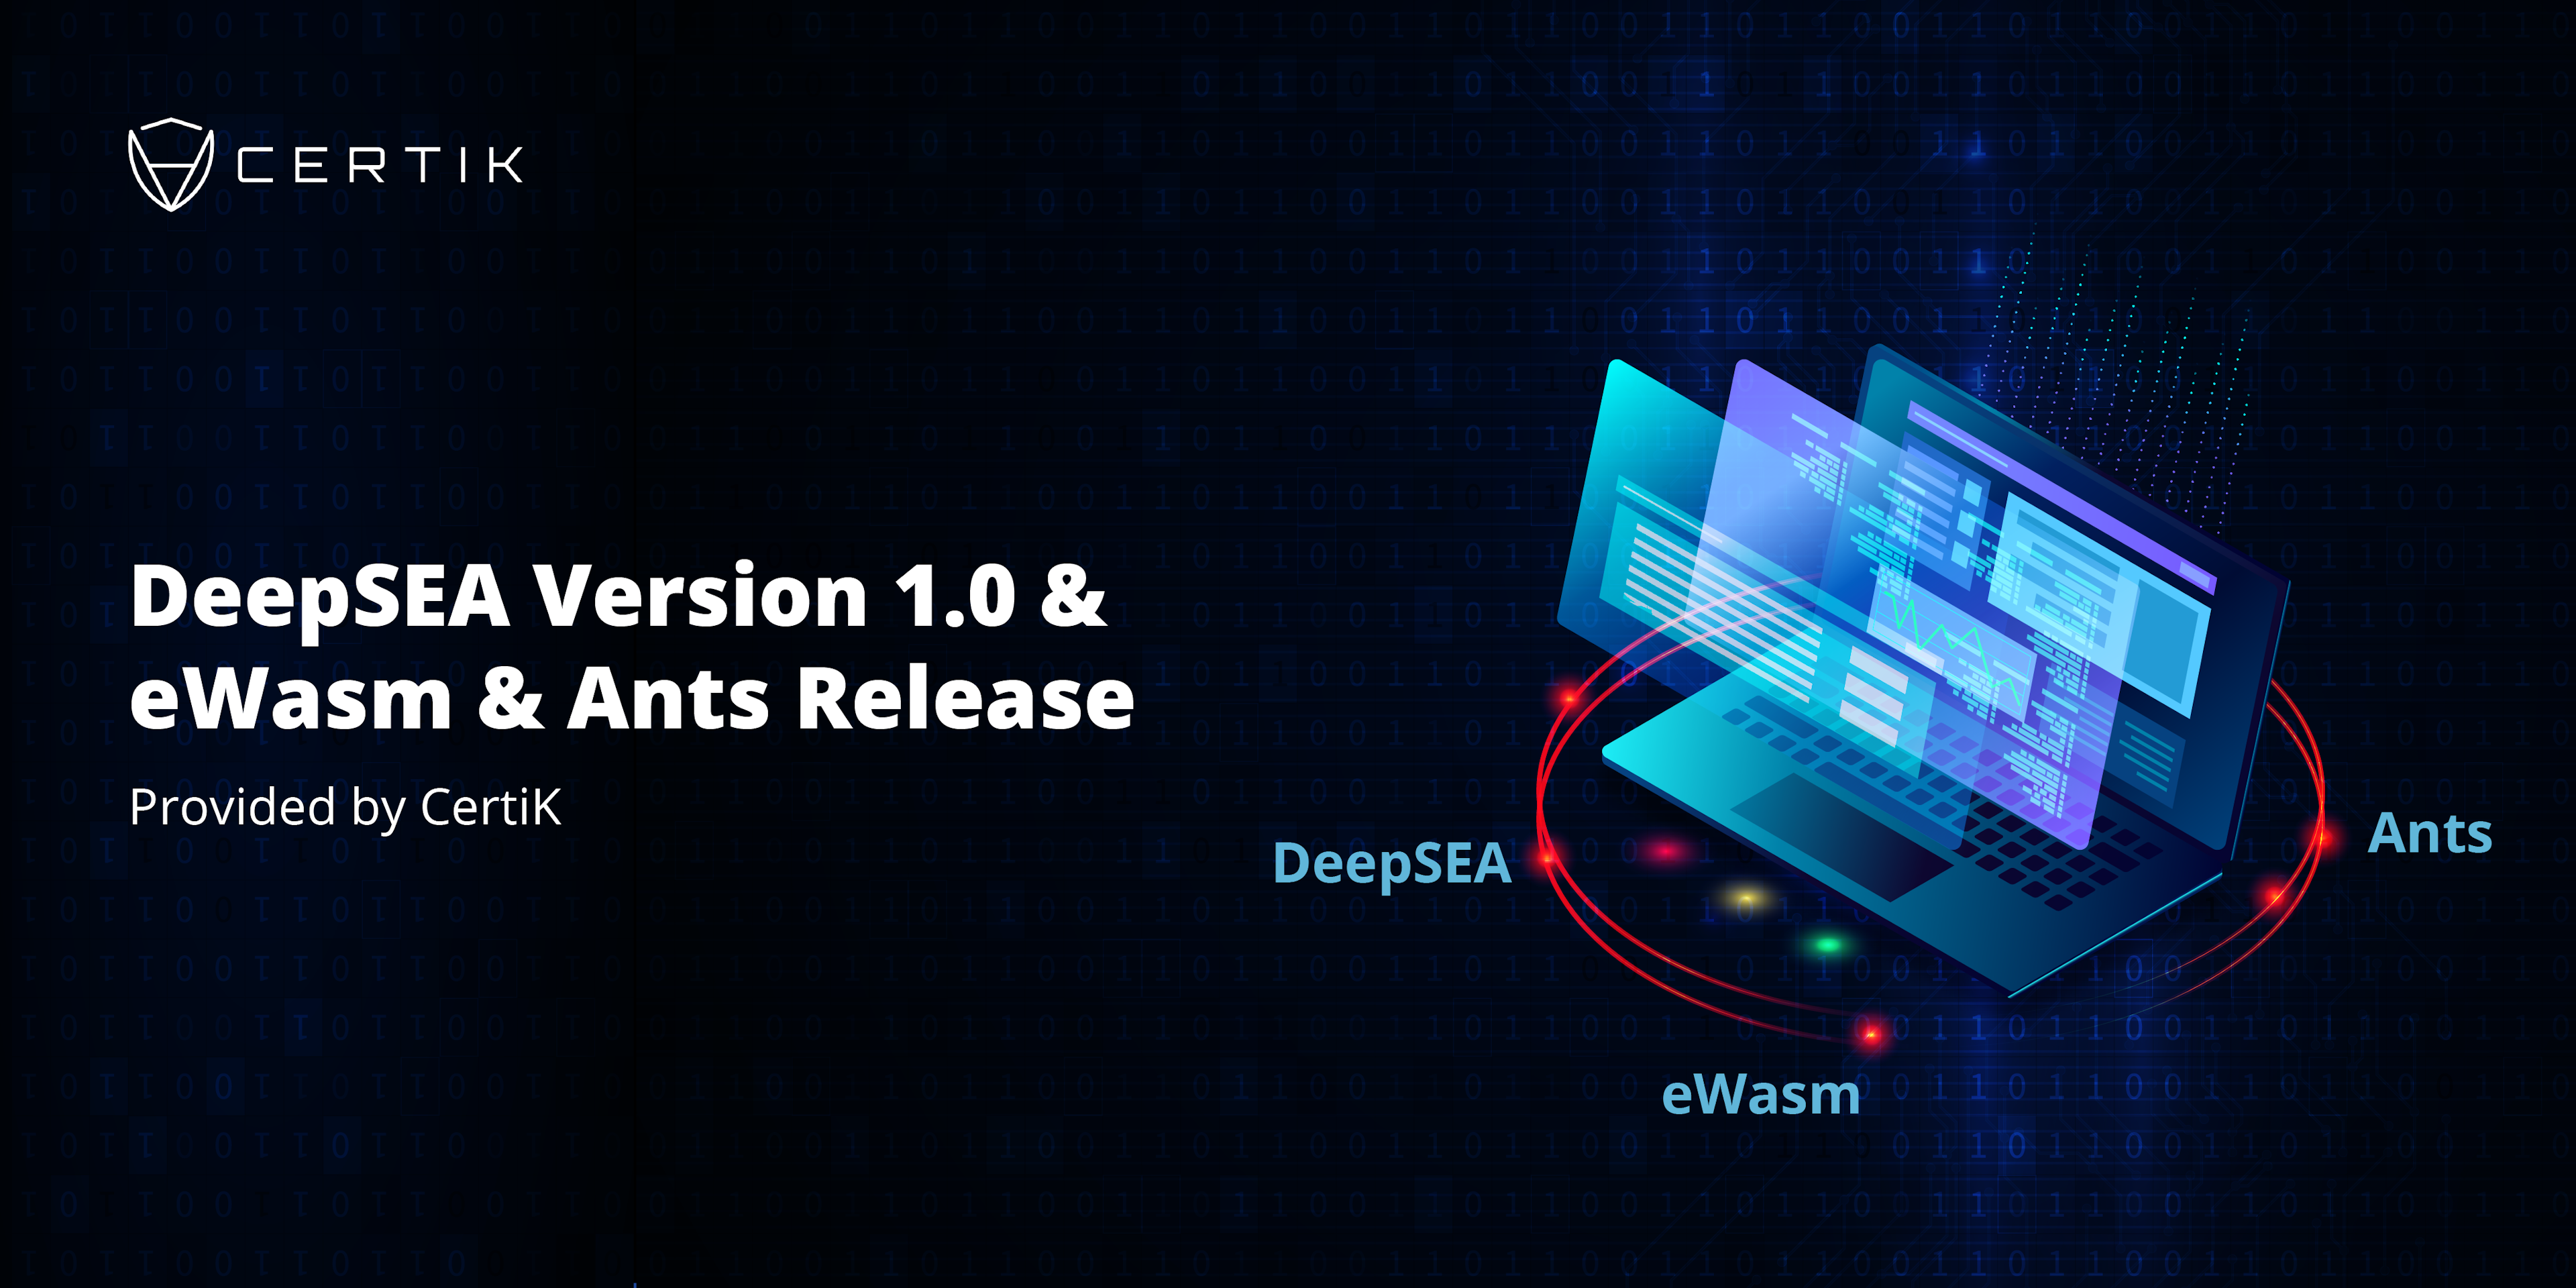 DeepSEA Version 1.0 with eWasm & Ants Release